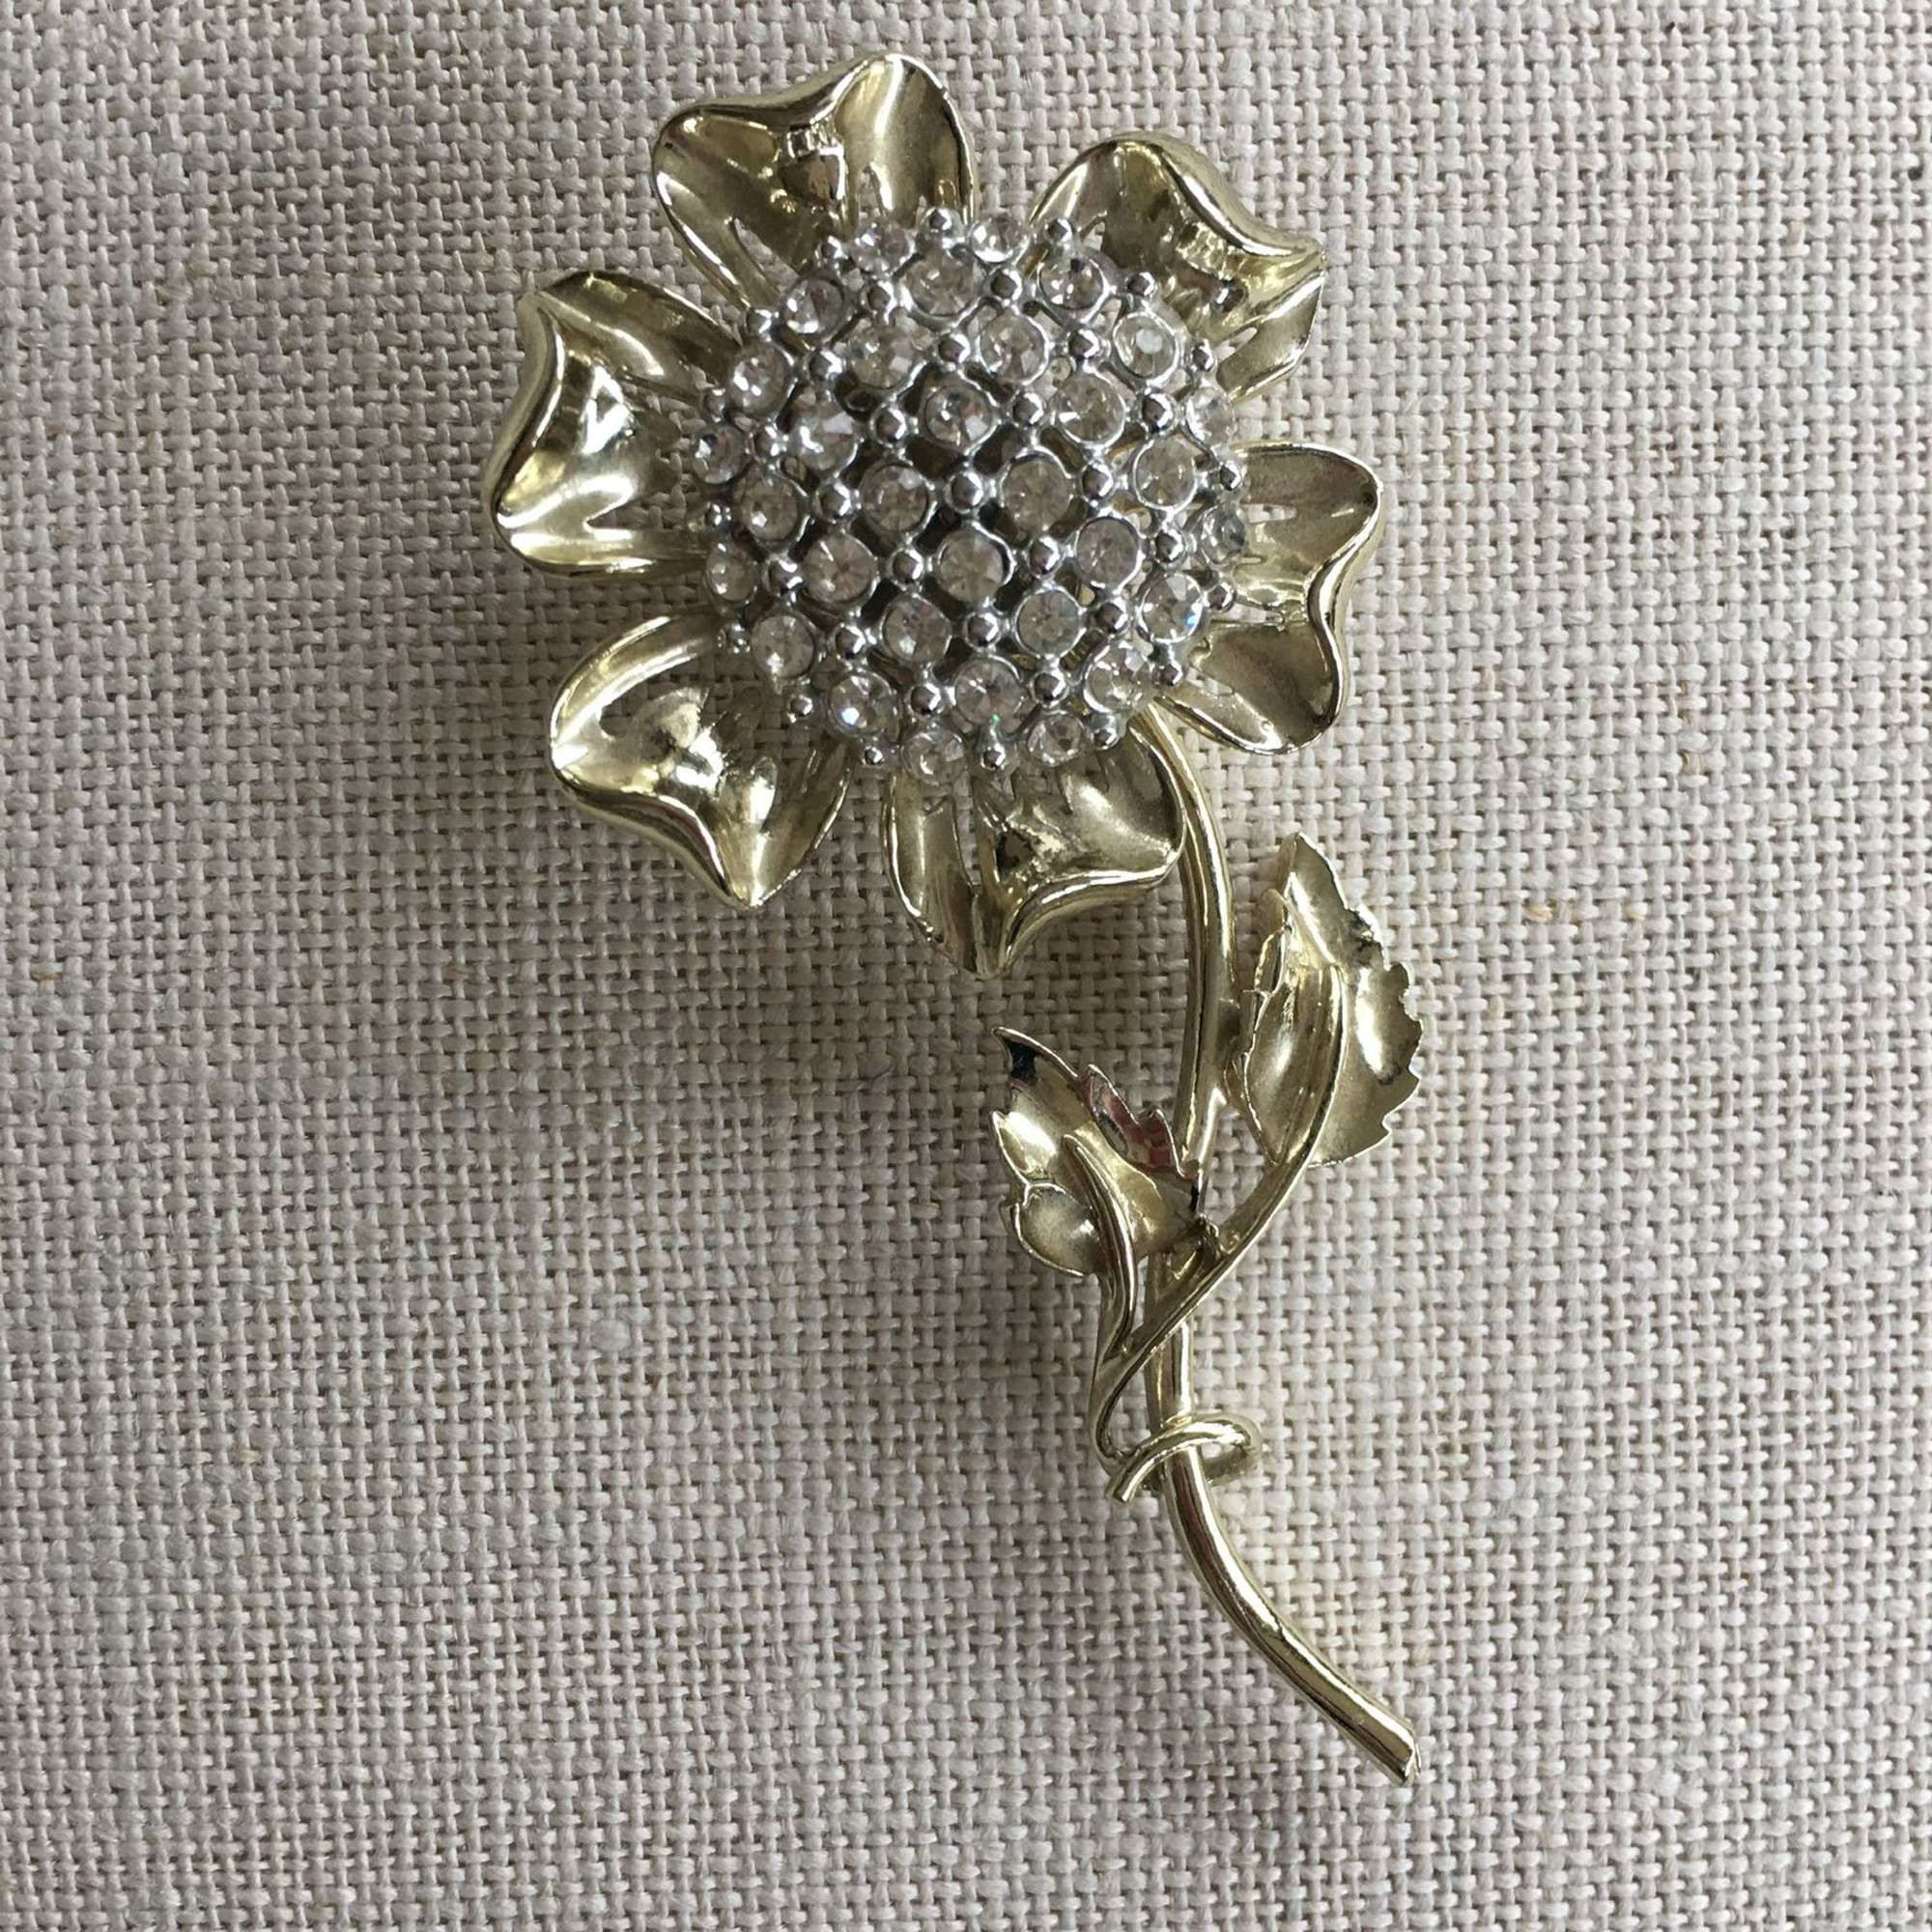 Vintage paste sunflower brooch by Jewelcraft